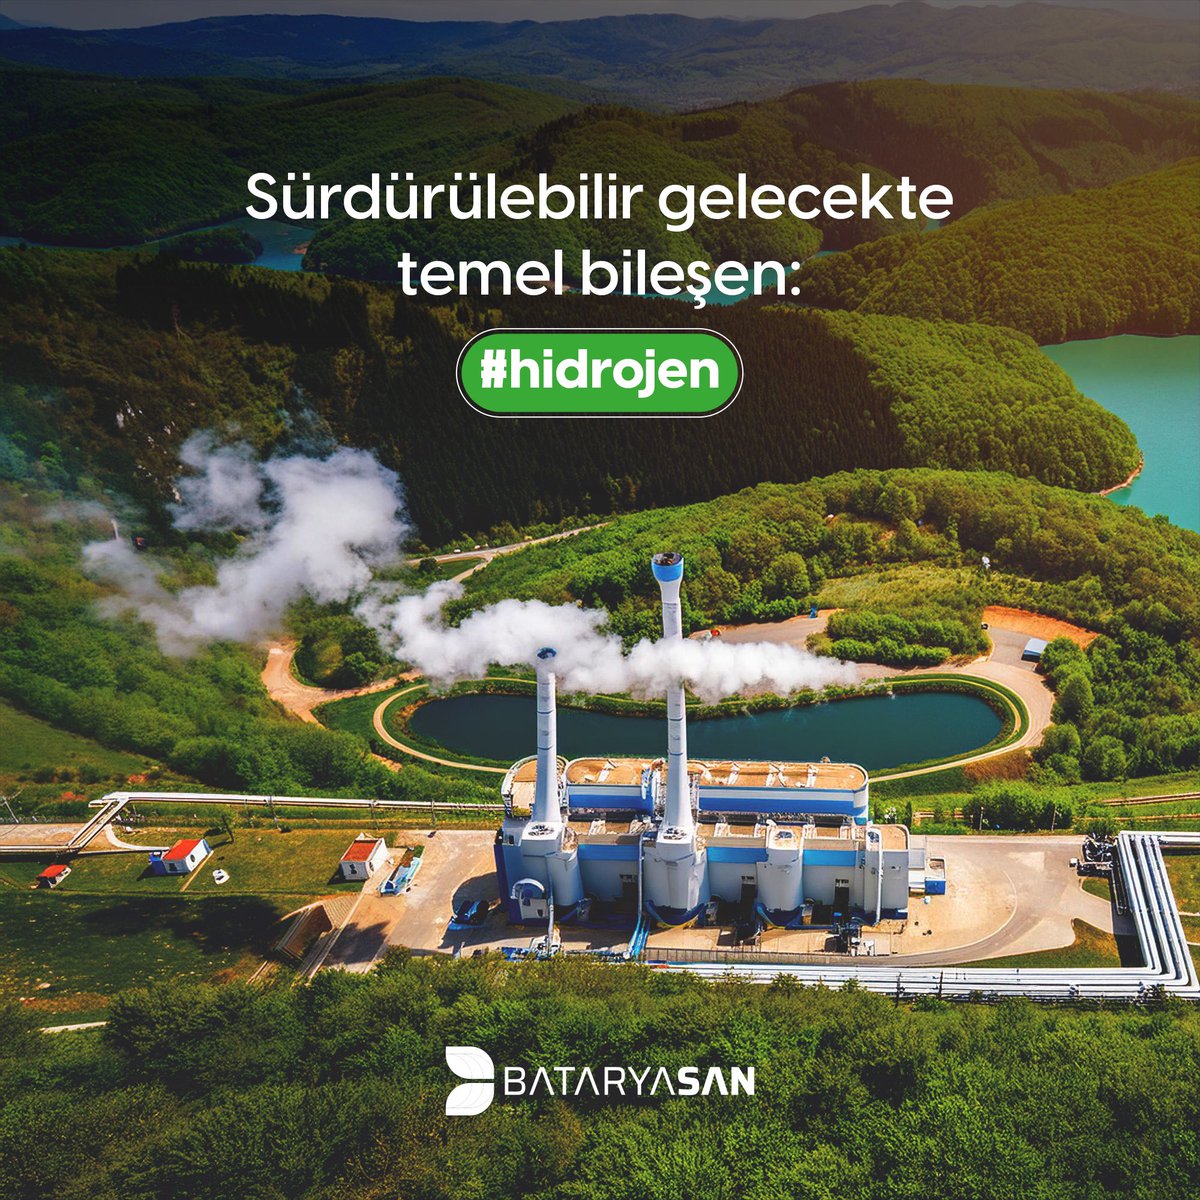 Sürdürülebilir gelecekte temel bileşen: #YeşilHidrojen 

#powergenerator #greenenergy #cleanenergy #energy #greenhydrogen #powerstation #temizenerji #hydrogen